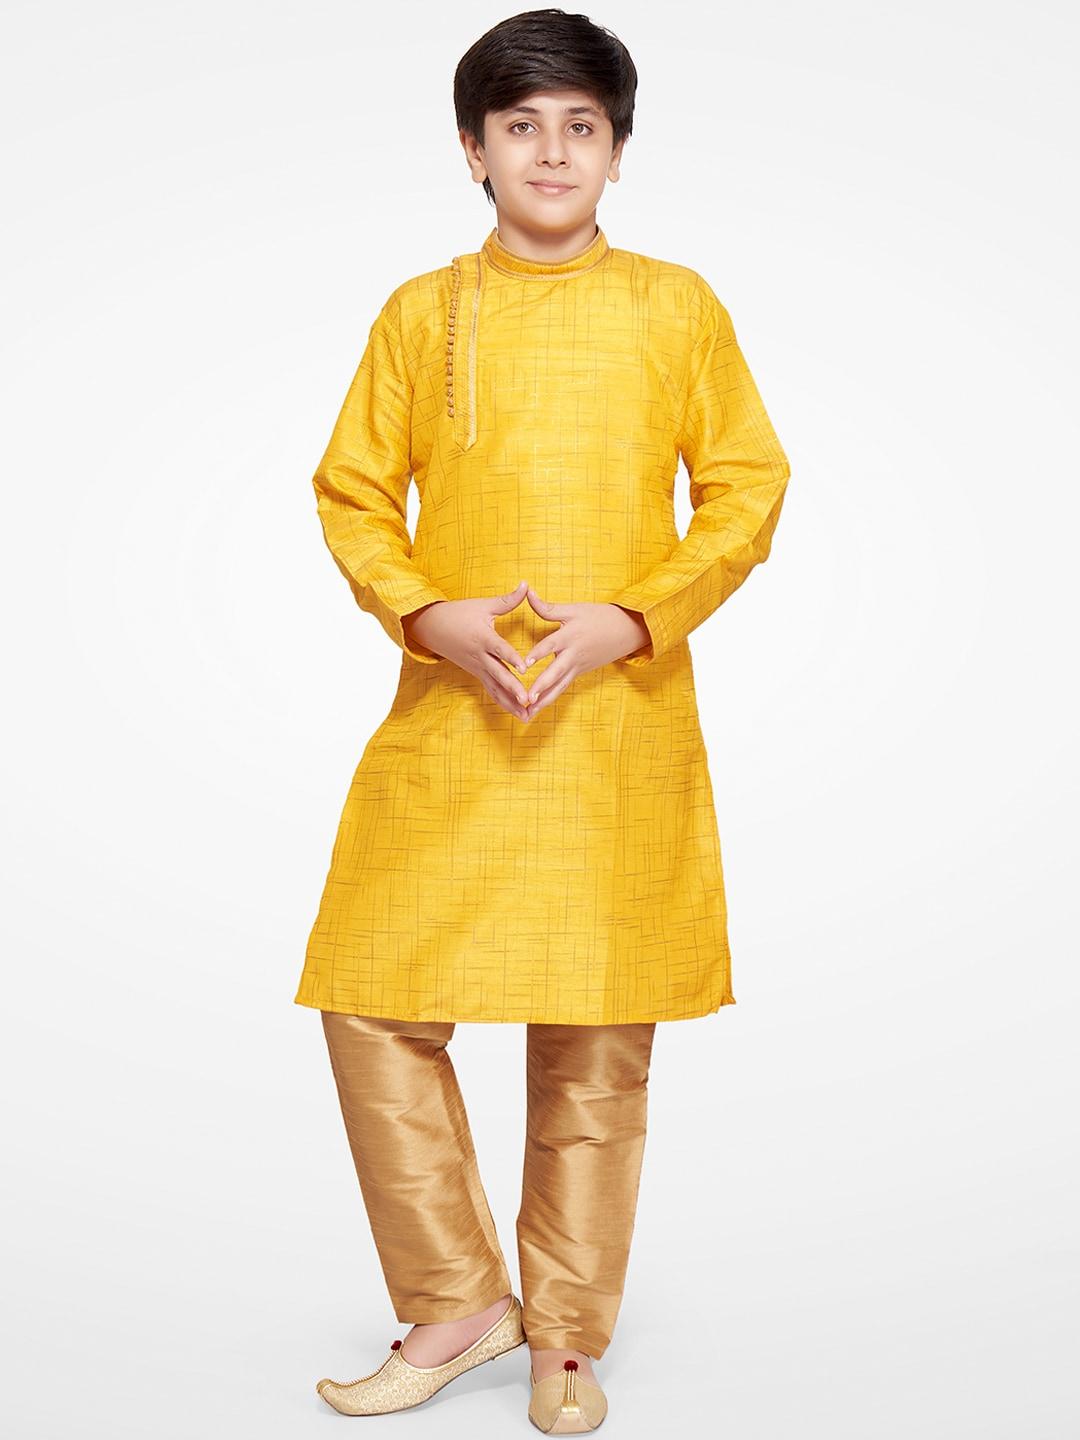 jeetethnics boys yellow abstract printed cotton blend kurta set